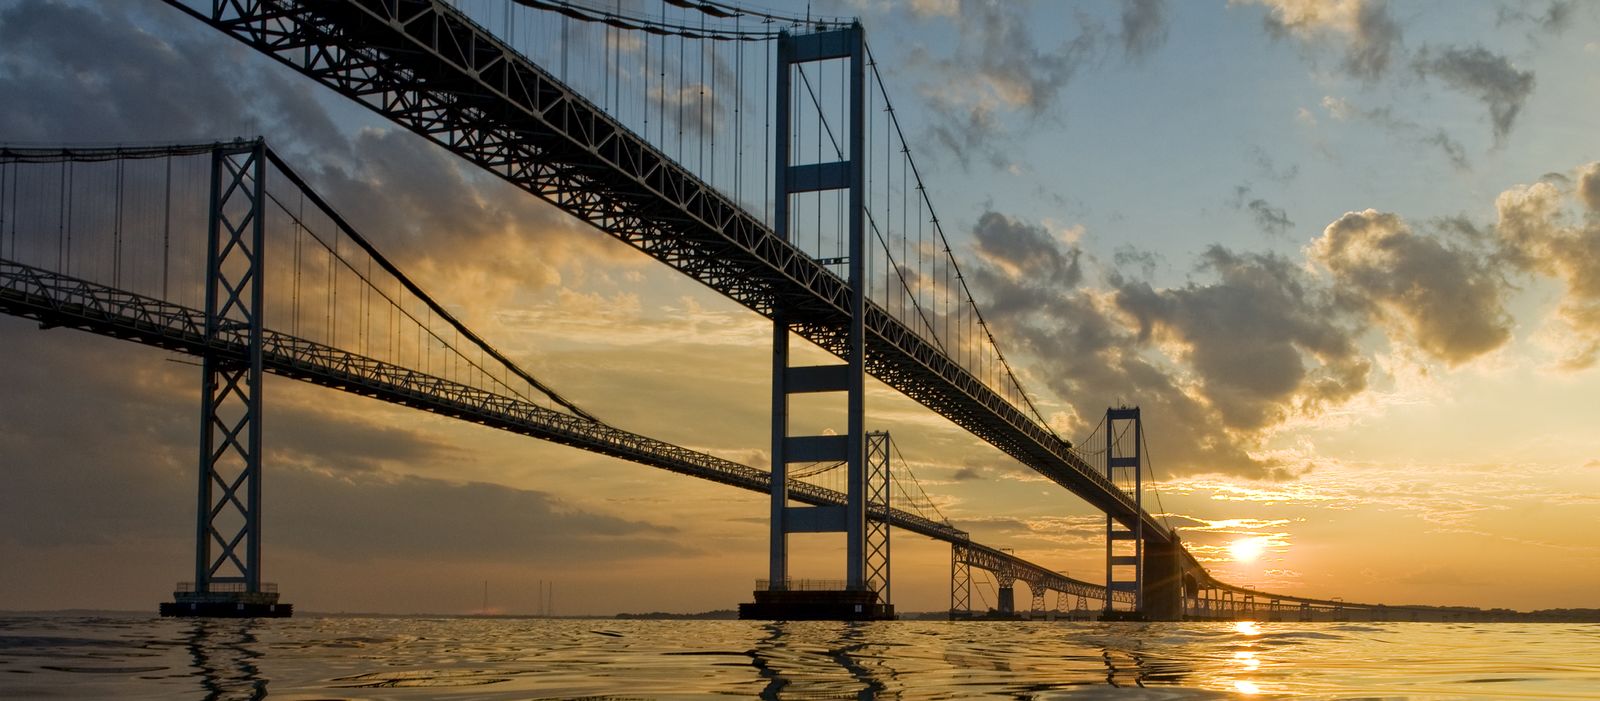 Die Chesapeake Bay Bridge im US-Bundesstaat Maryland bei Sonnenuntergang